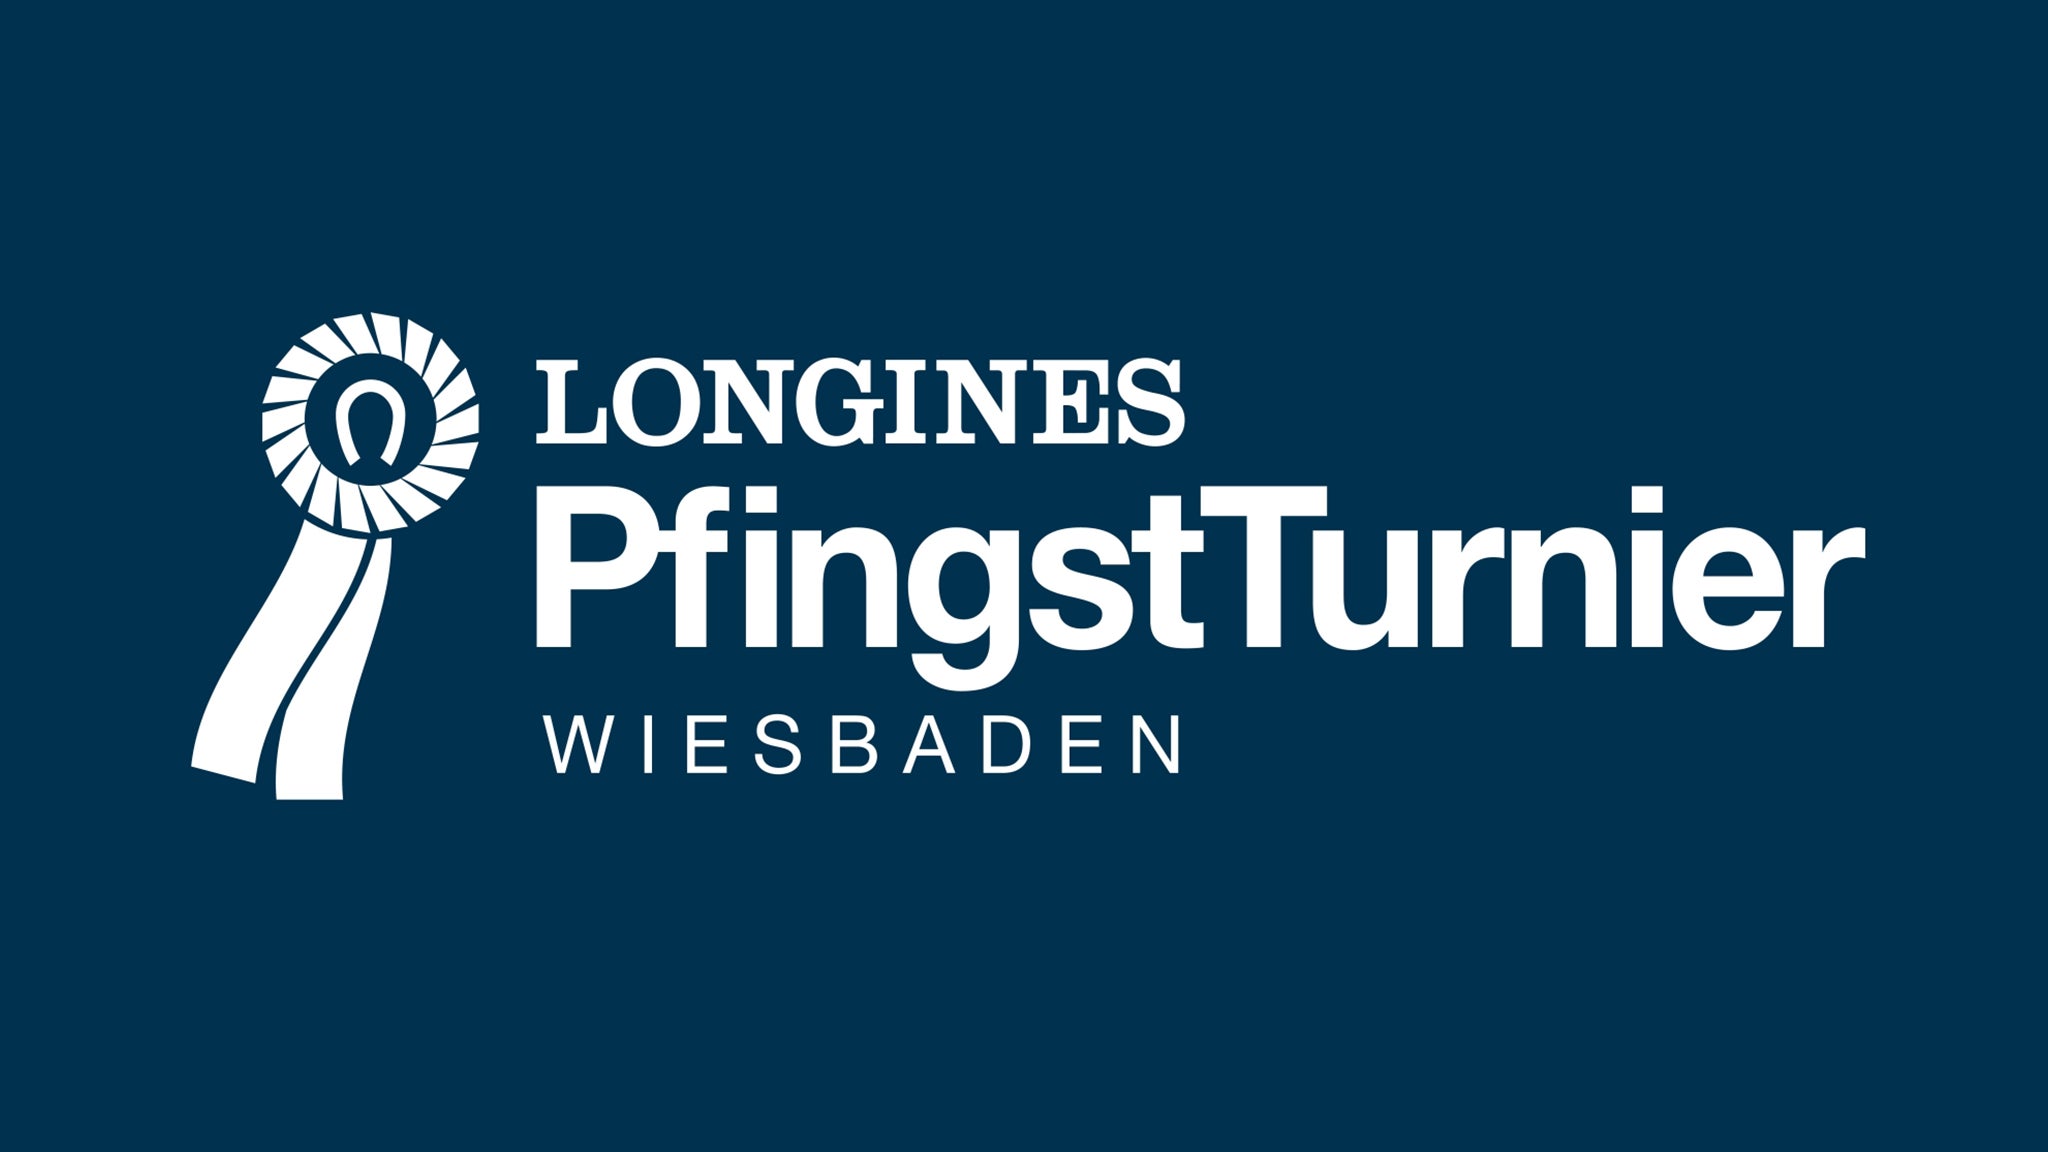 LONGINES PfingstTurnier Wiesbaden